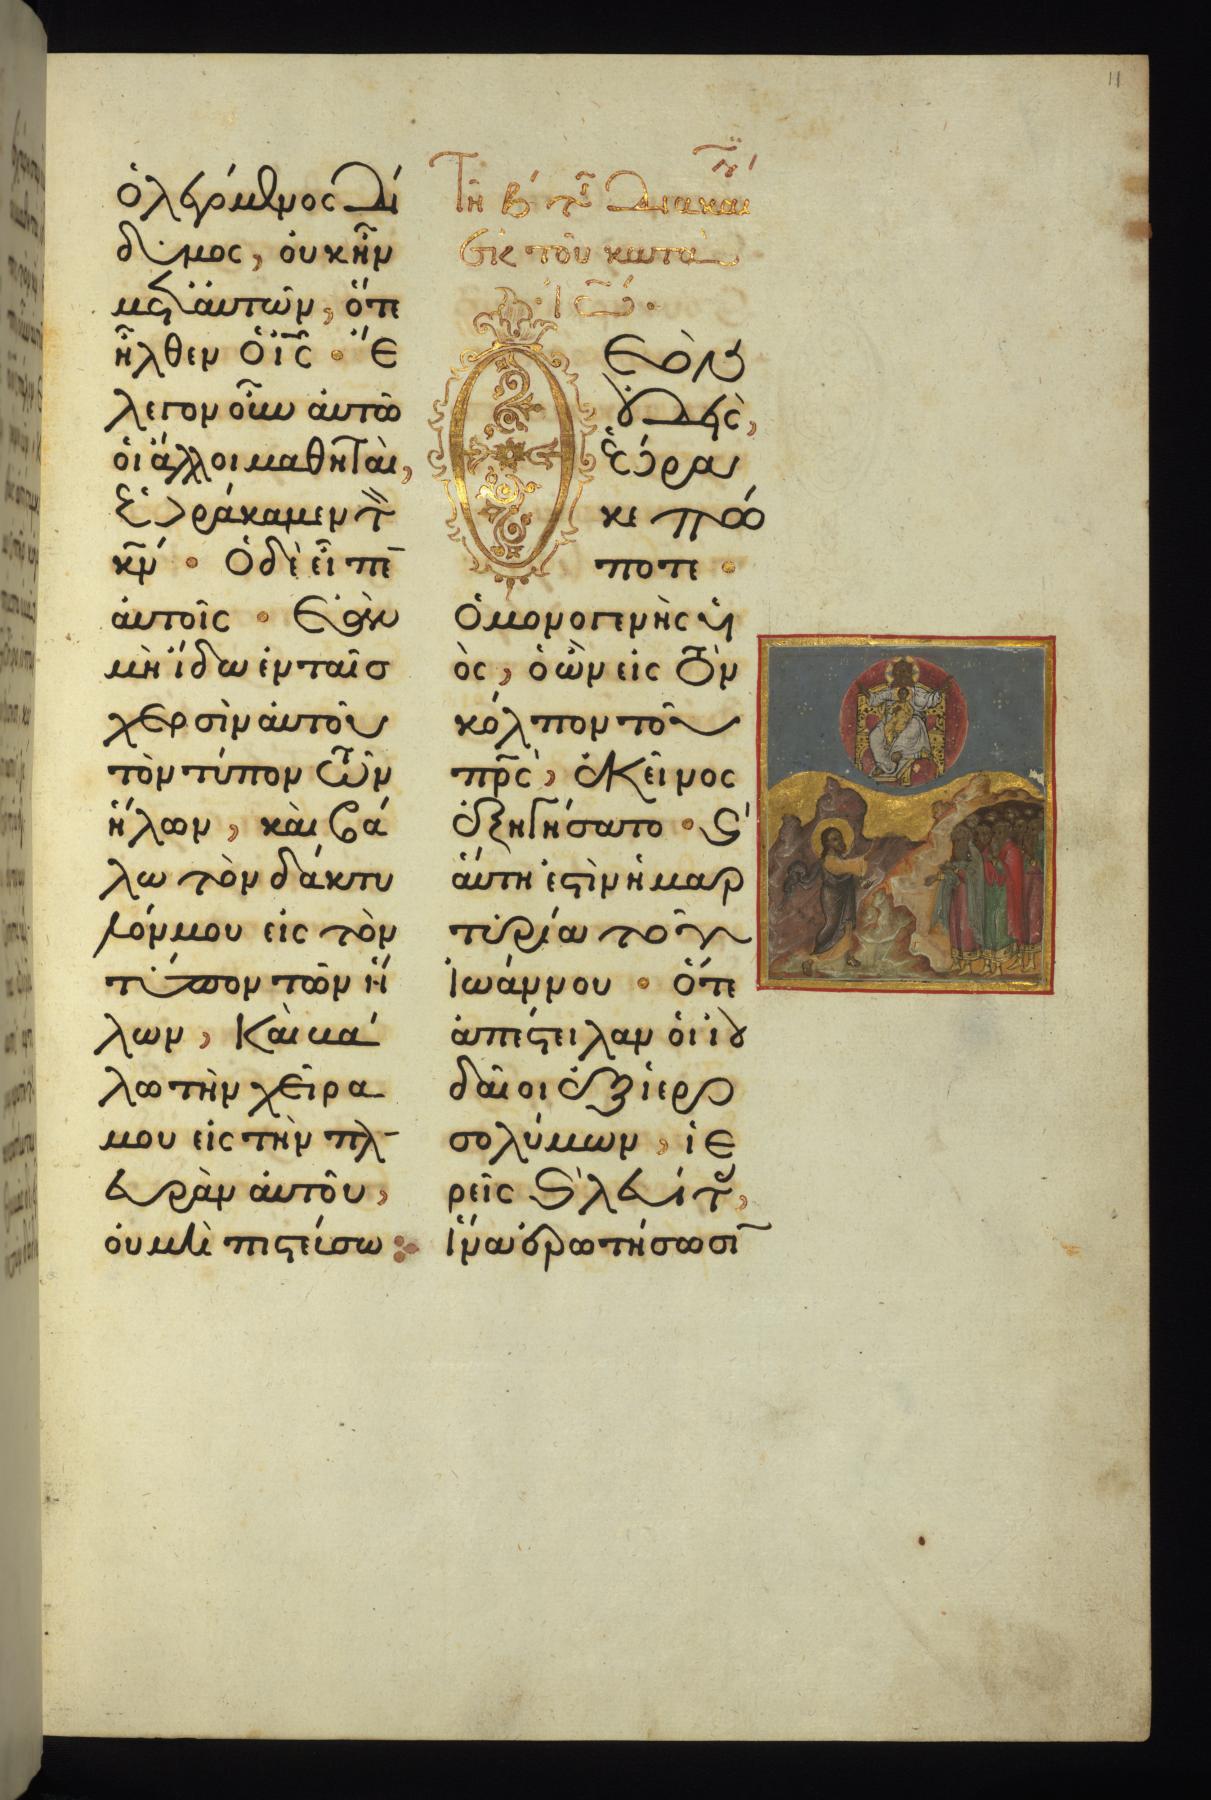 St. John the Baptist Preaching, John 1:19-20 (1594-1596, Russia) by Lukas of Cyprus - Public Domain Illuminated Manuscript